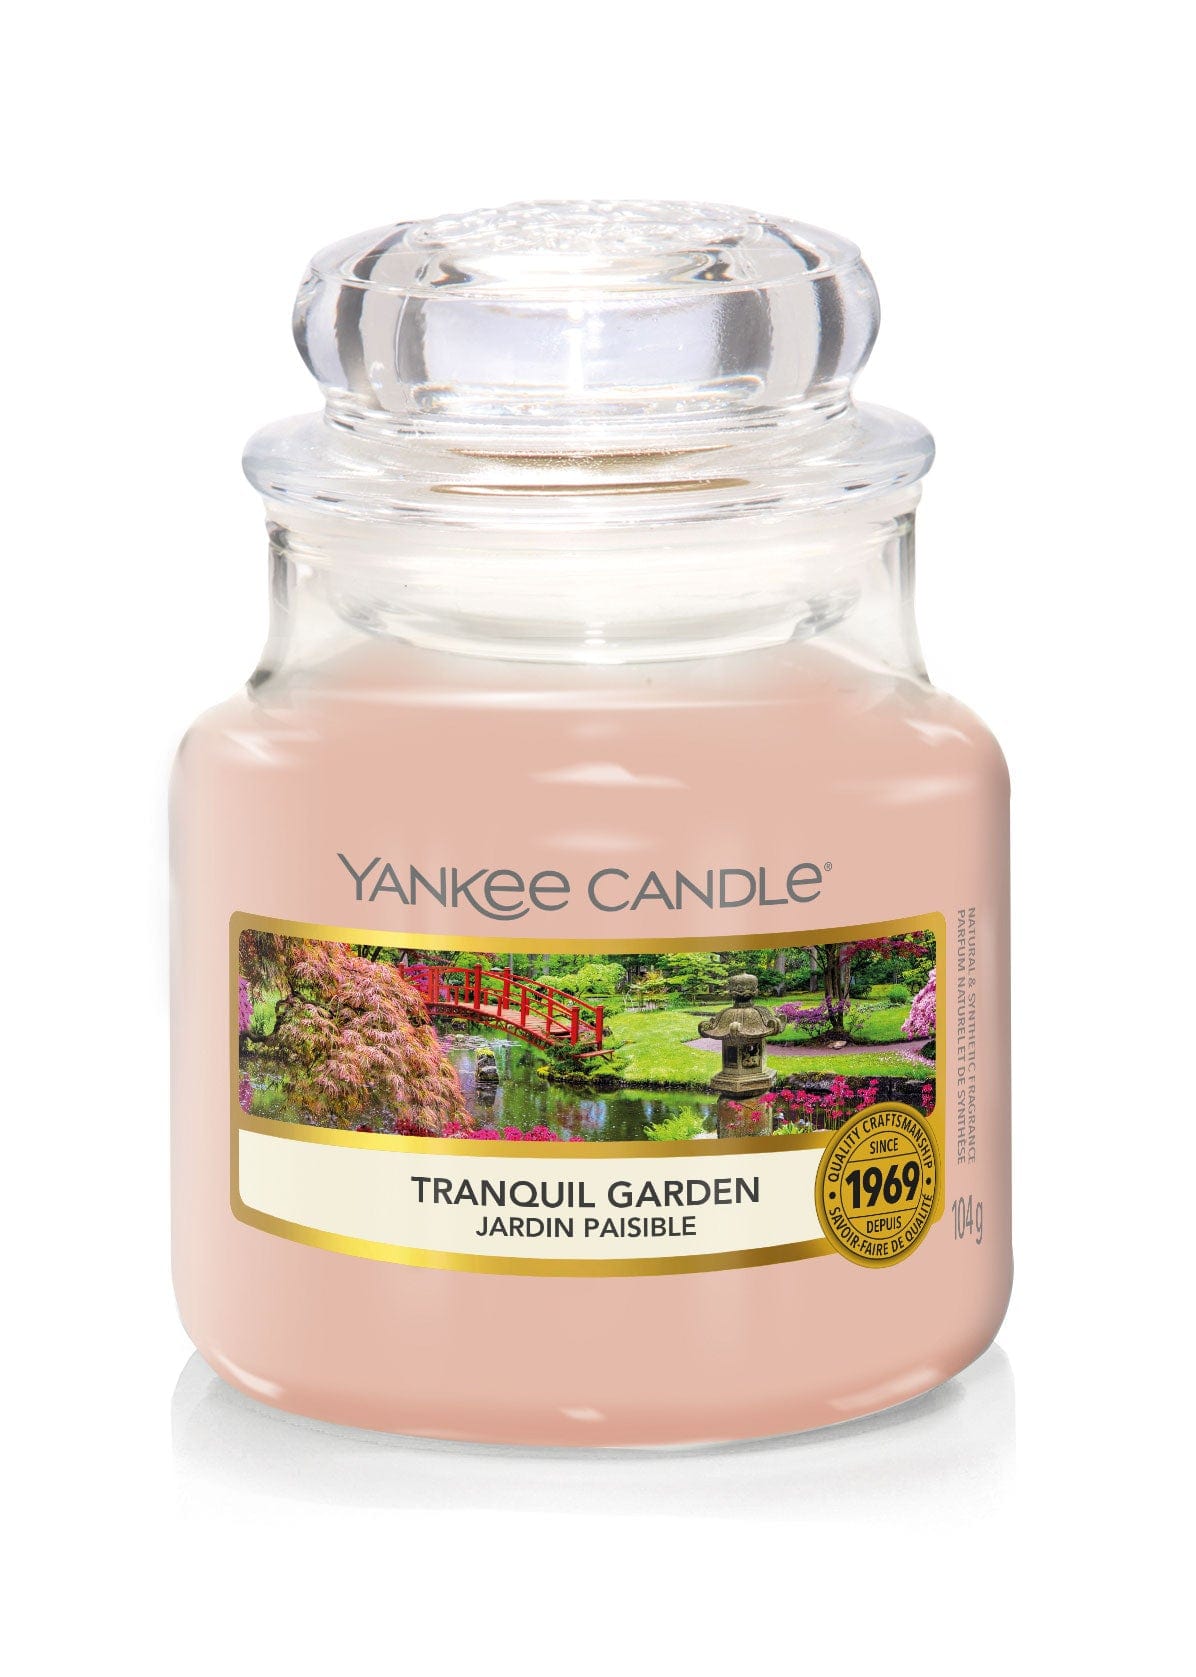 Yankee Candle Medium Jar Candle Yankee Candle Small Jar - Tranquil Garden